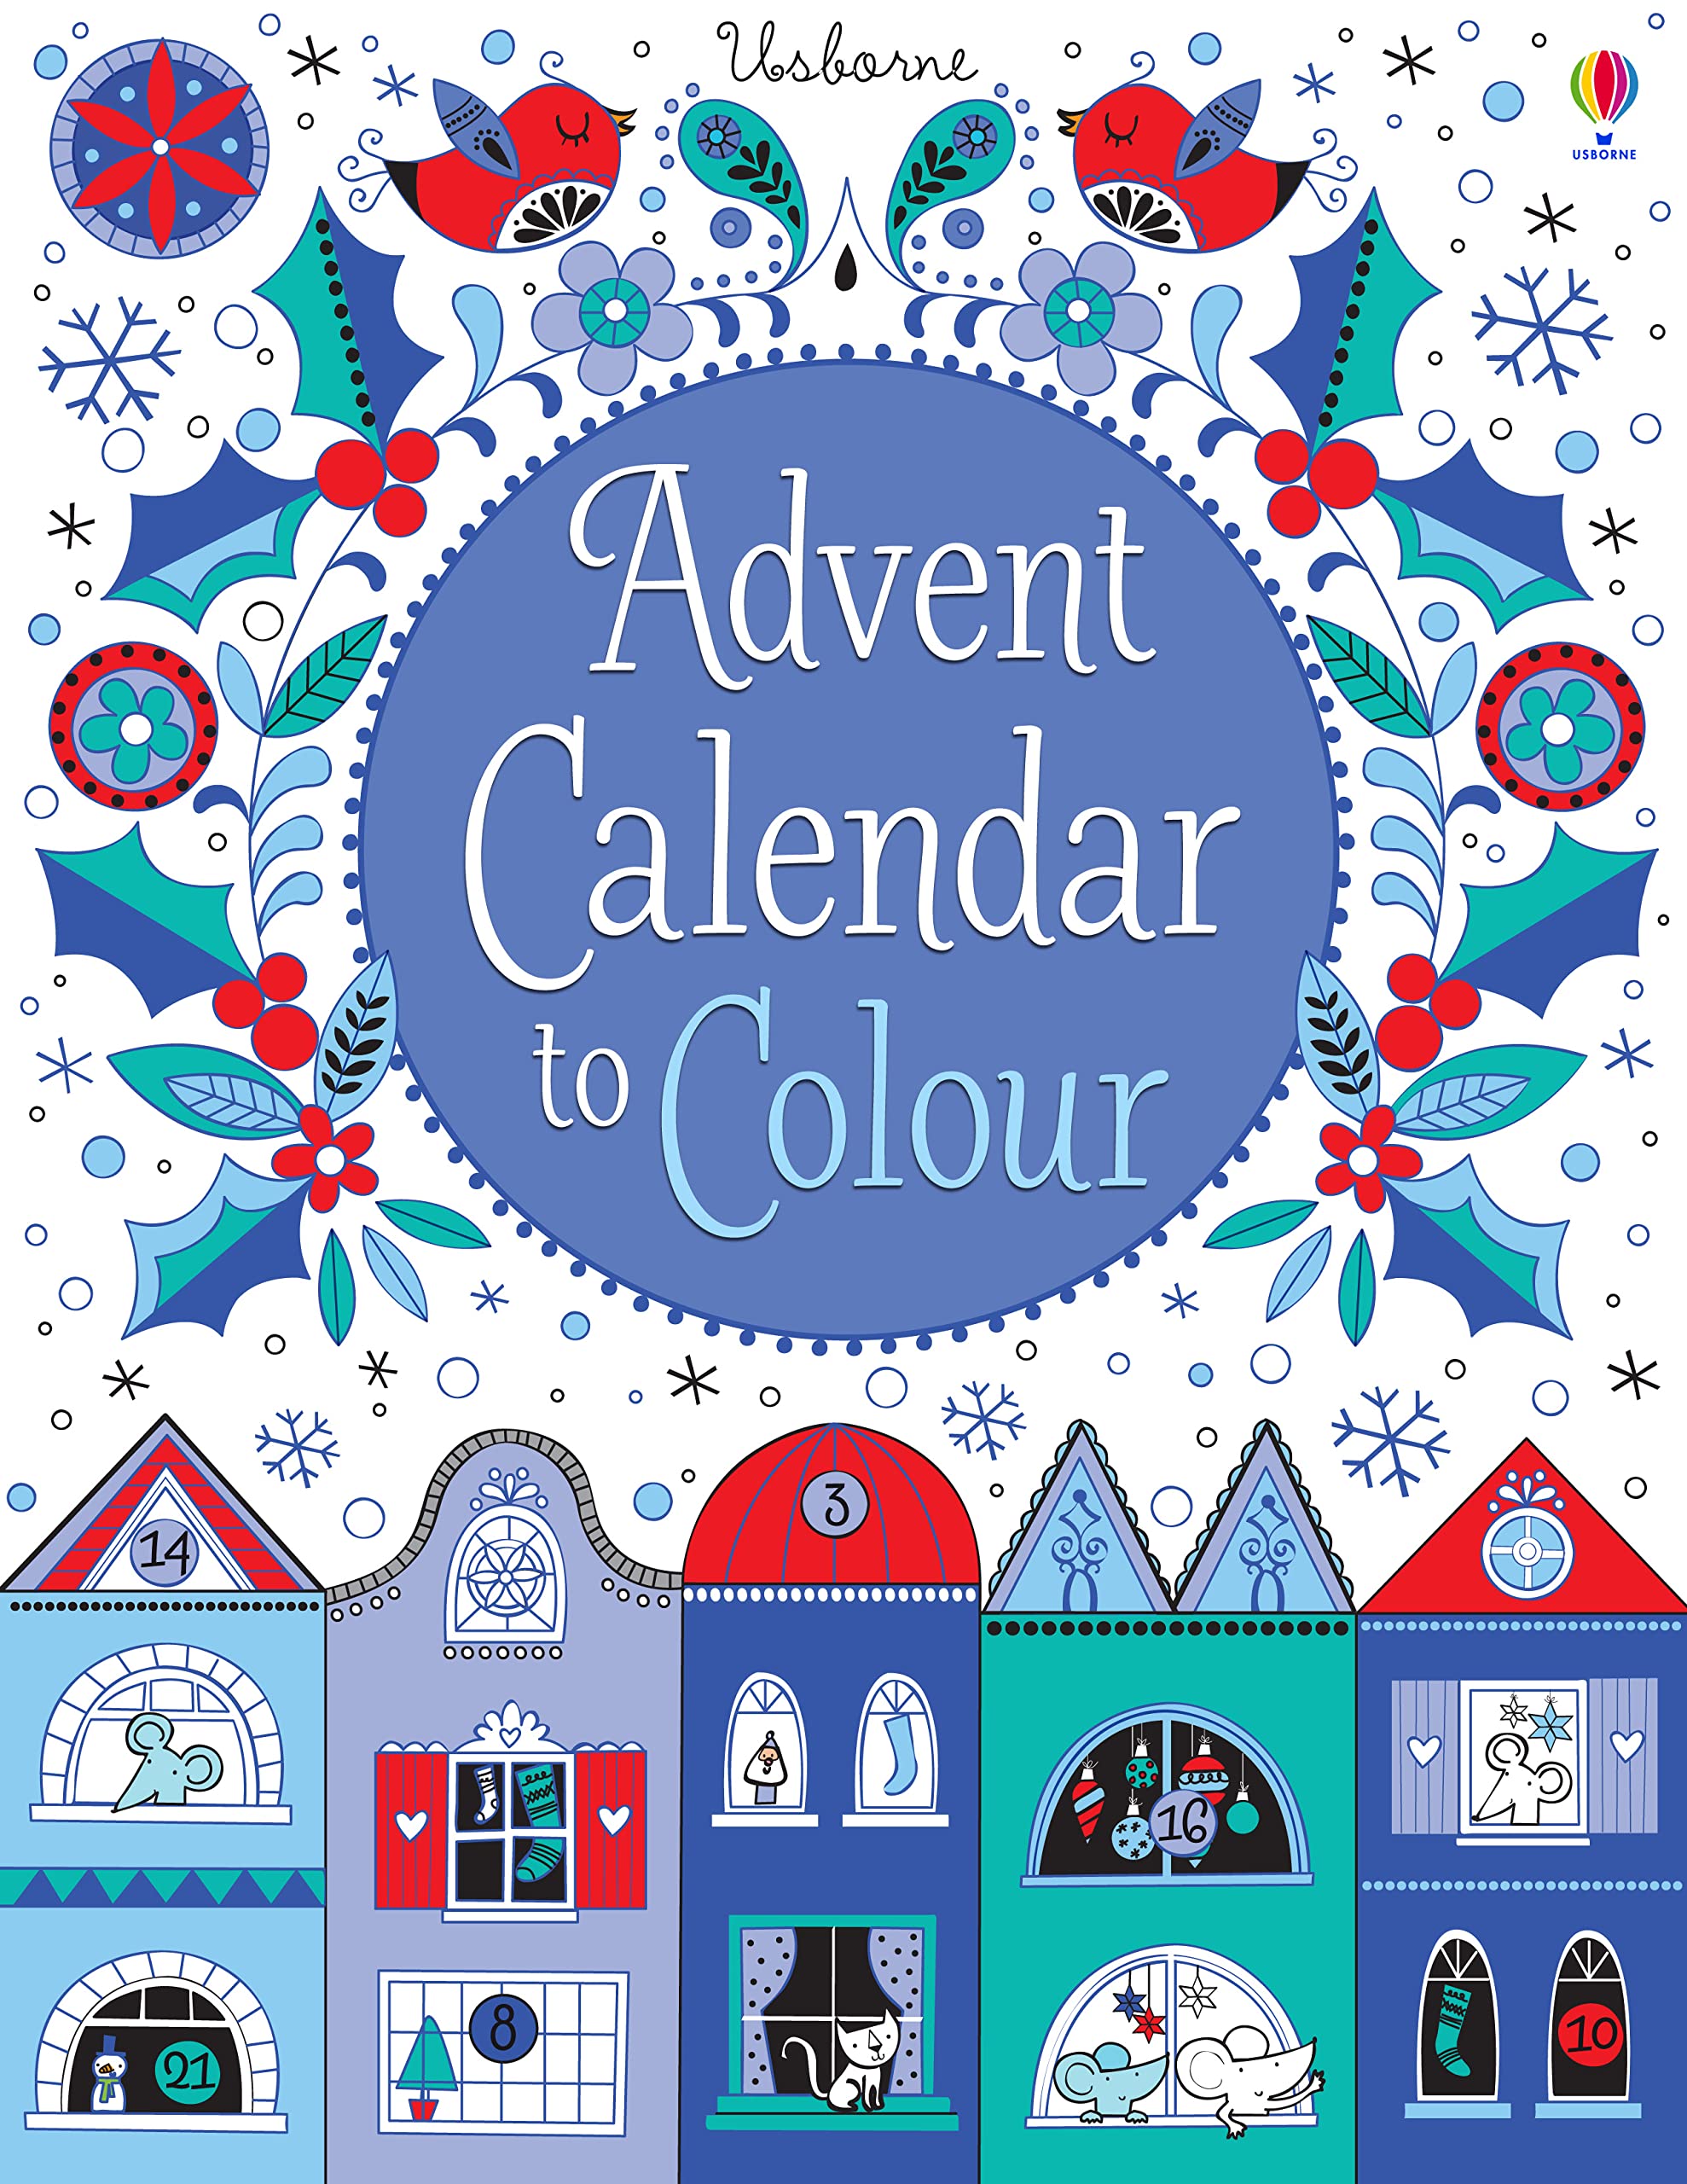 Advent Calendar to Colour - Lighten Up Shop